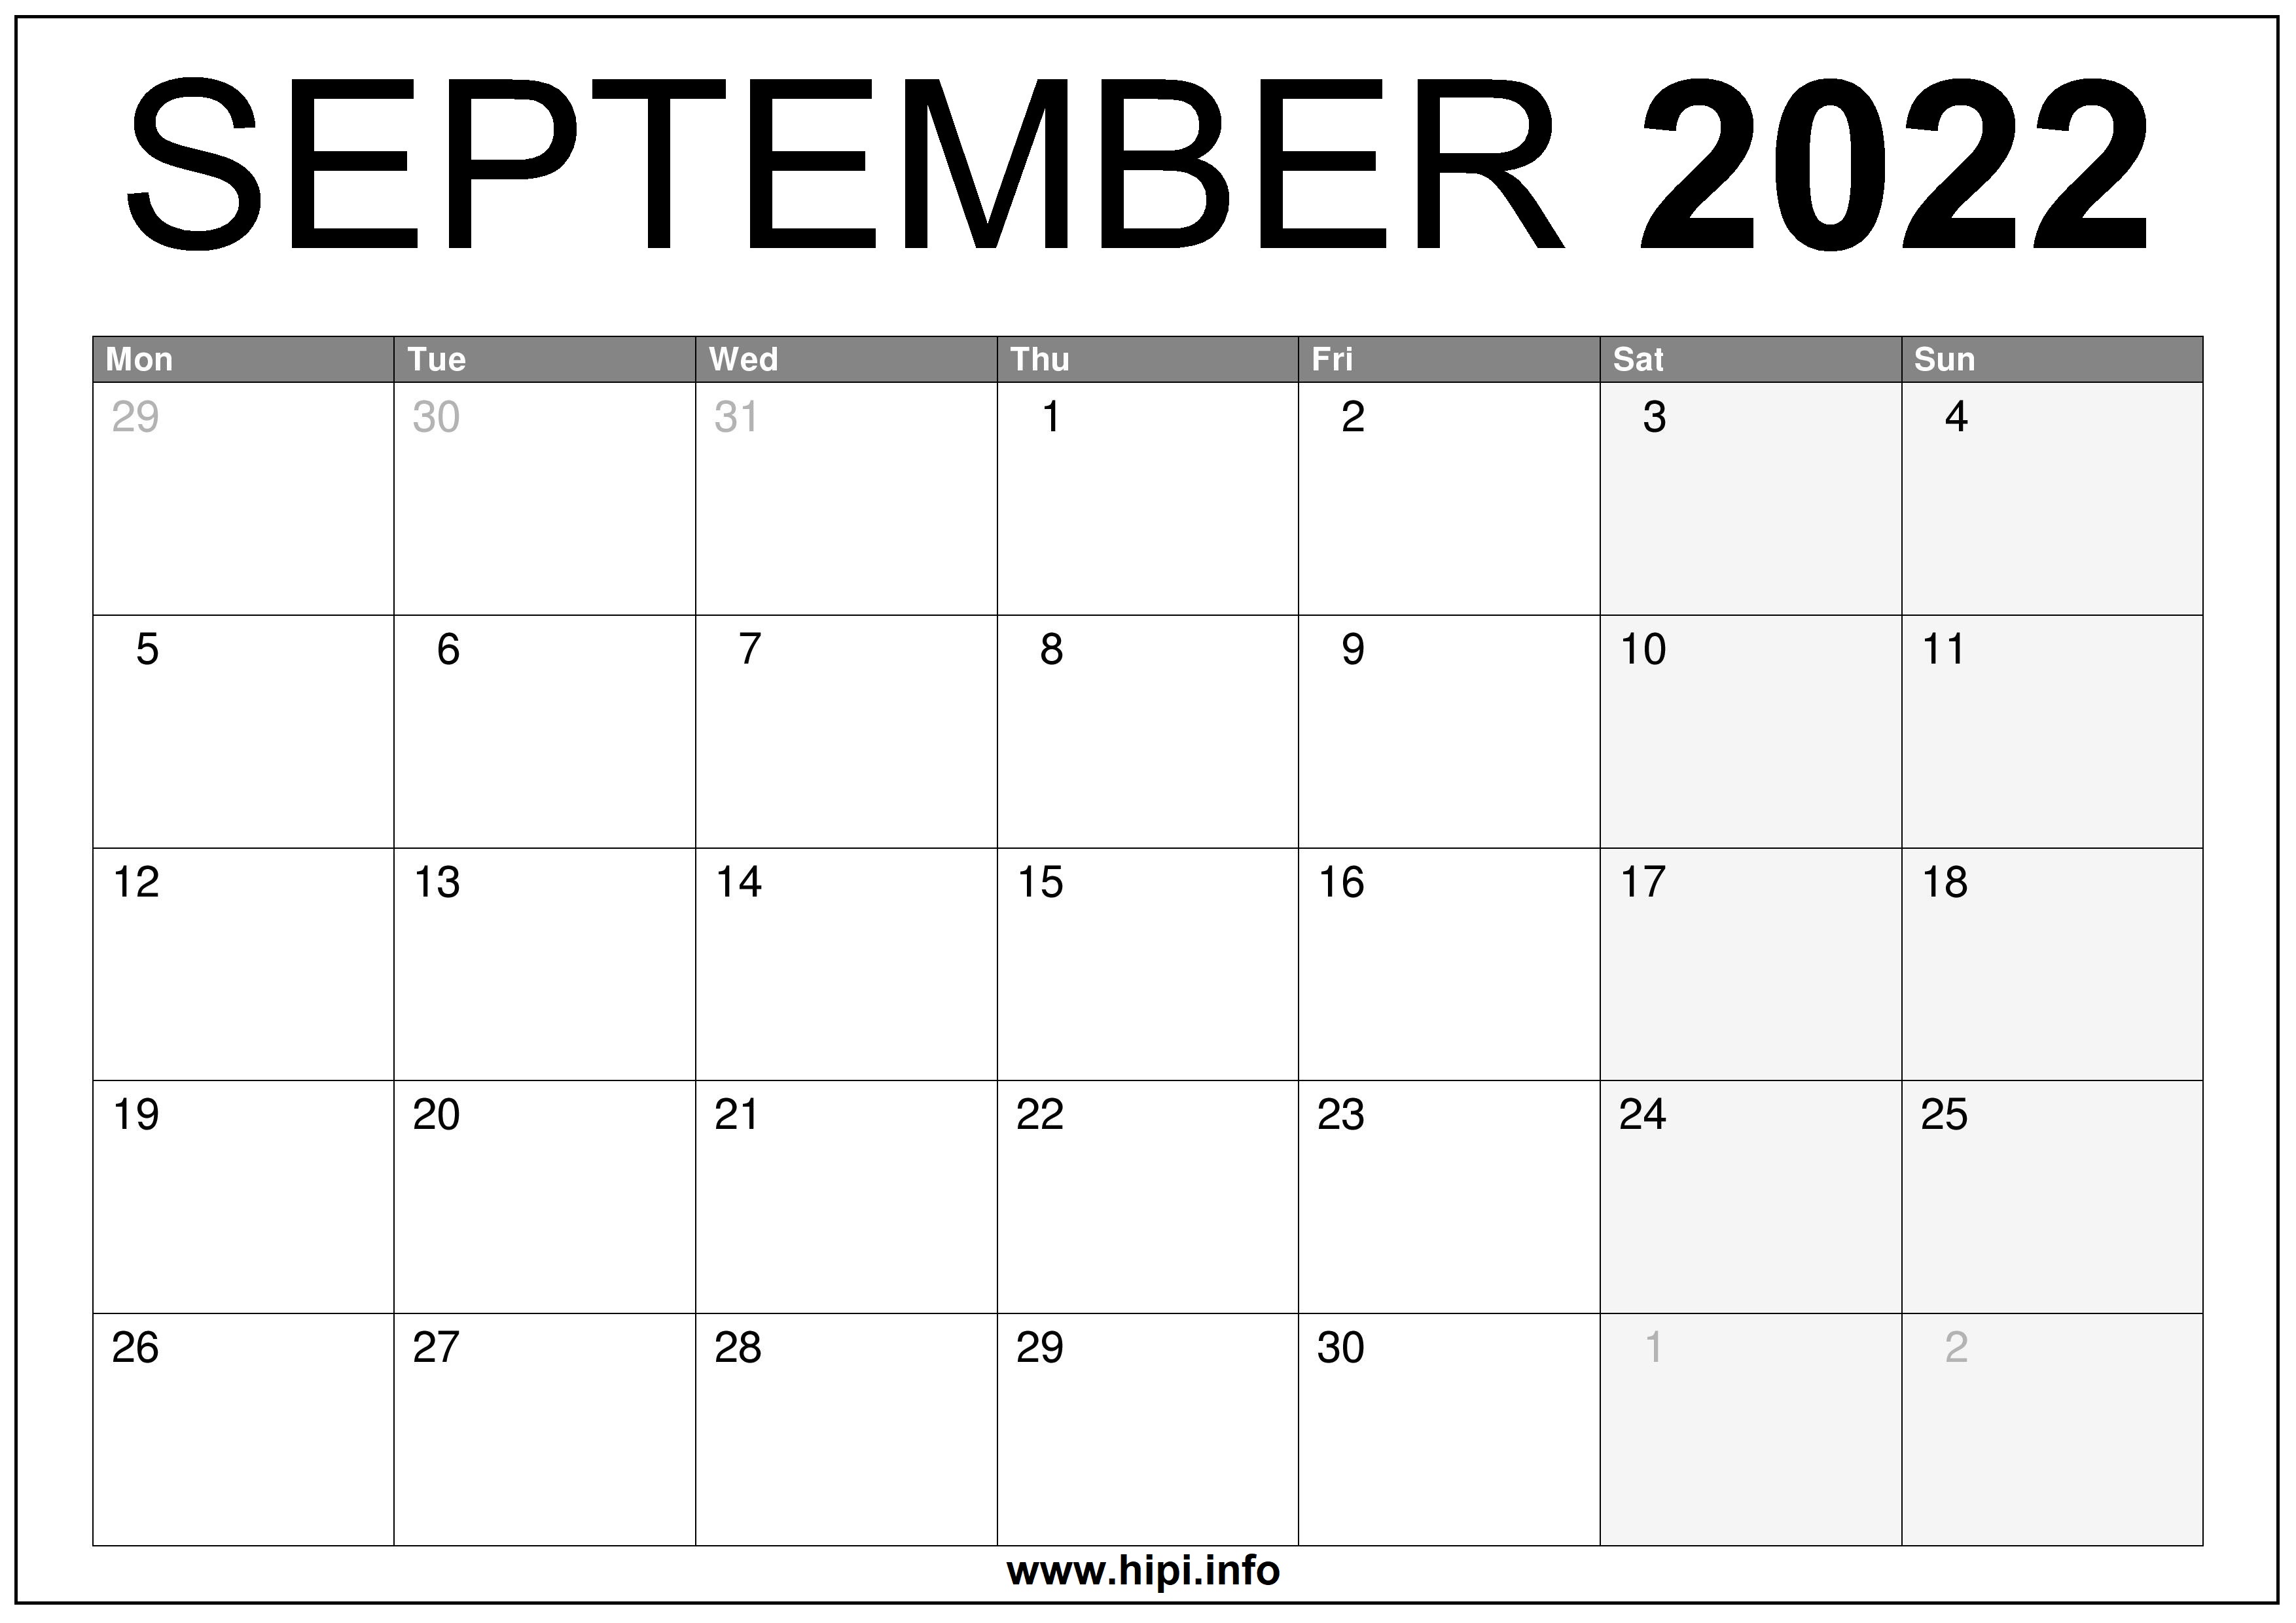 September 2022 Monthly Calendar September 2022 Uk Calendar Printable Free - Hipi.info | Calendars Printable  Free